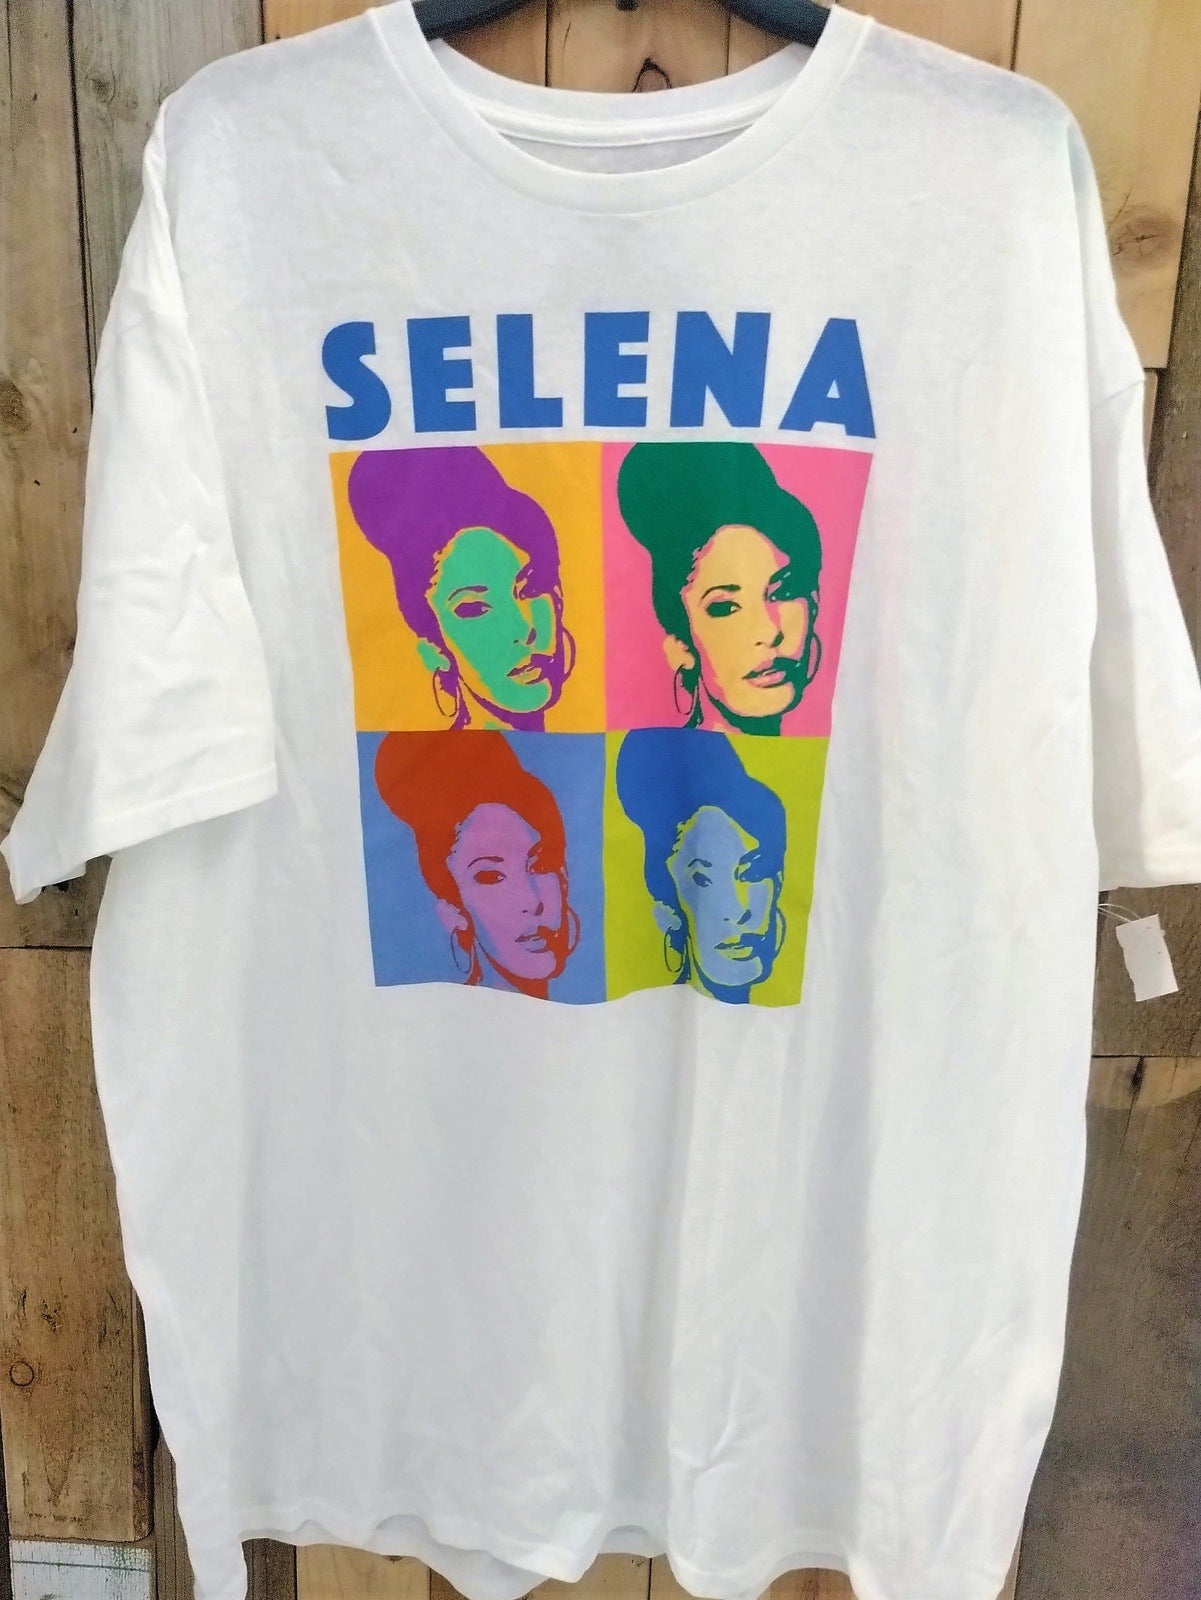 Selena Official Merchandise T Shirt Size 2X 956859WH